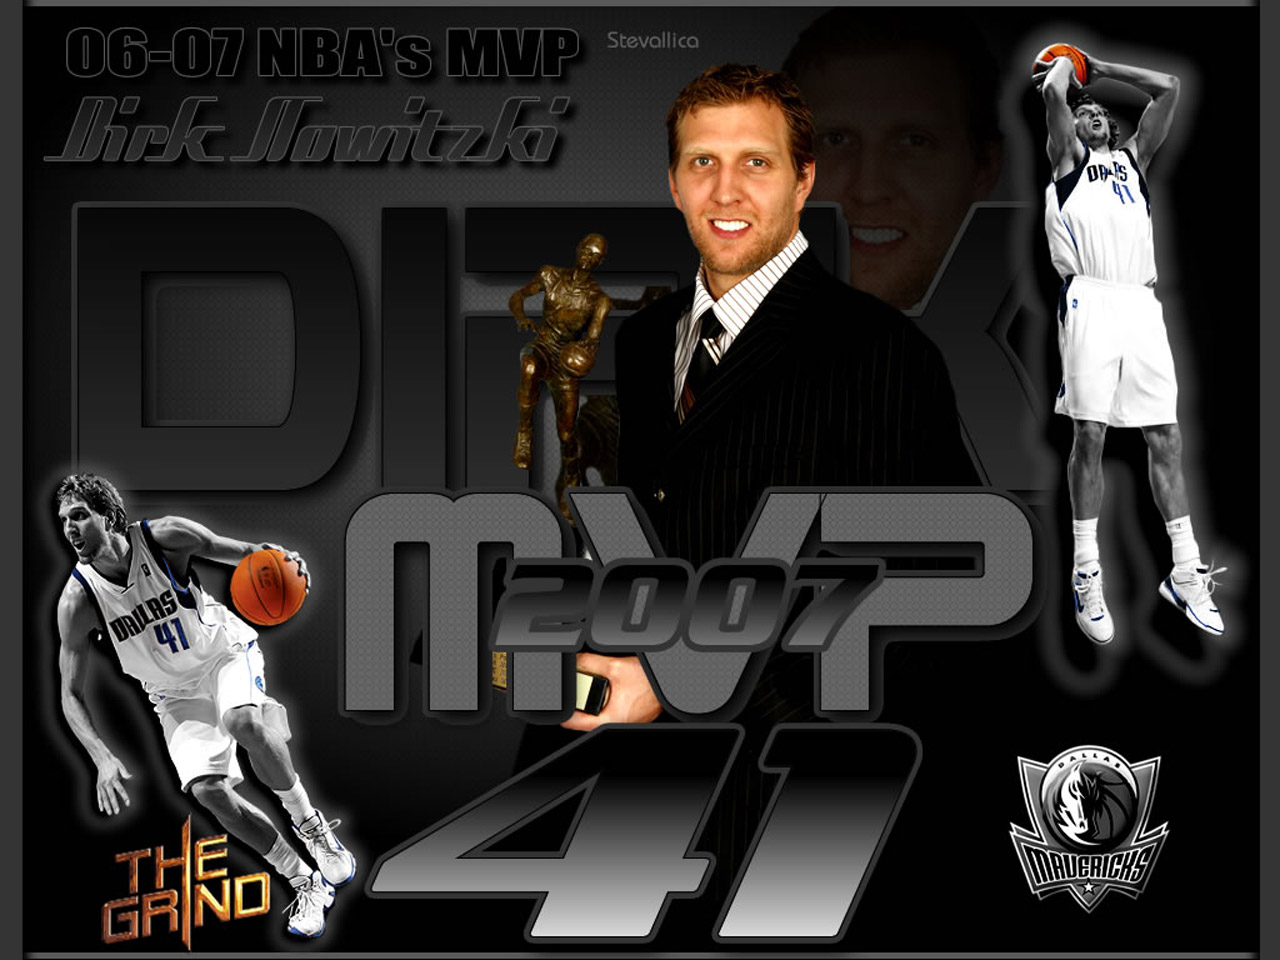 http://4.bp.blogspot.com/_Wg6aUKXC6KY/TPIppzufYPI/AAAAAAAACeY/dGcoAgTVu6k/s1600/Dirk-Nowitzki-2007-MVP-Wallpaper.jpg